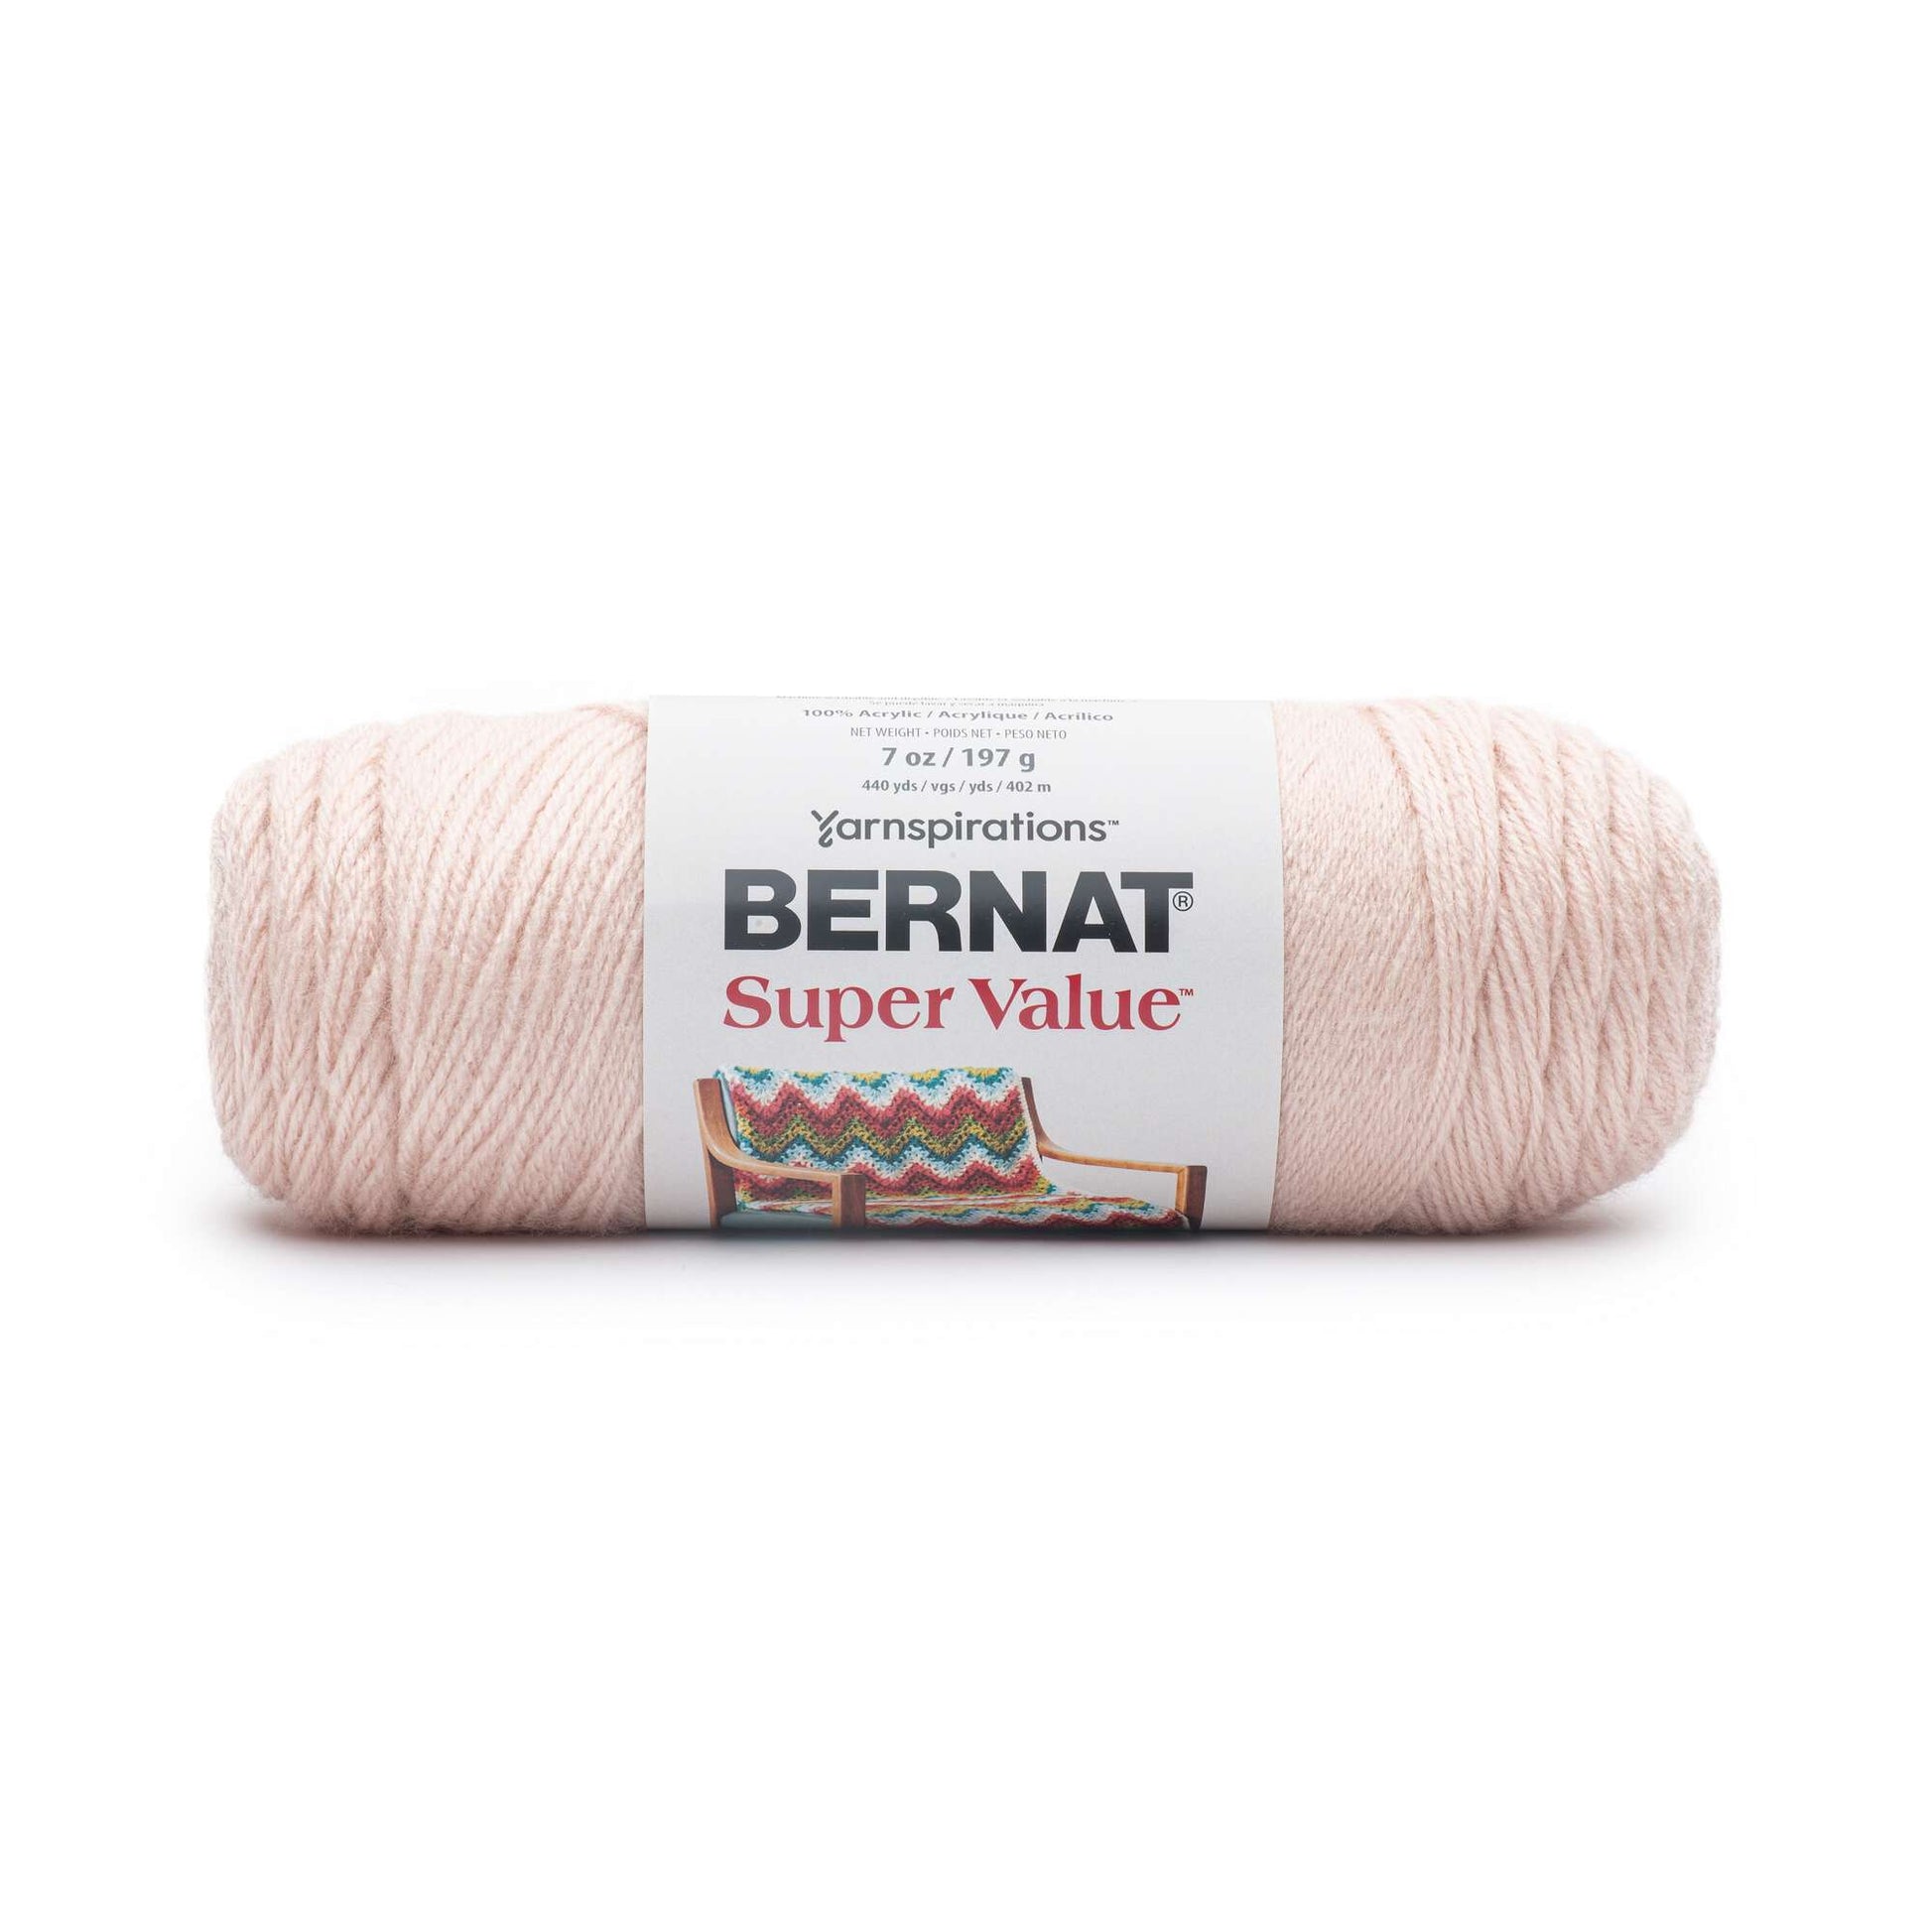 Bernat Super Value Yarn, 3 Pack, Burgundy 3 Count